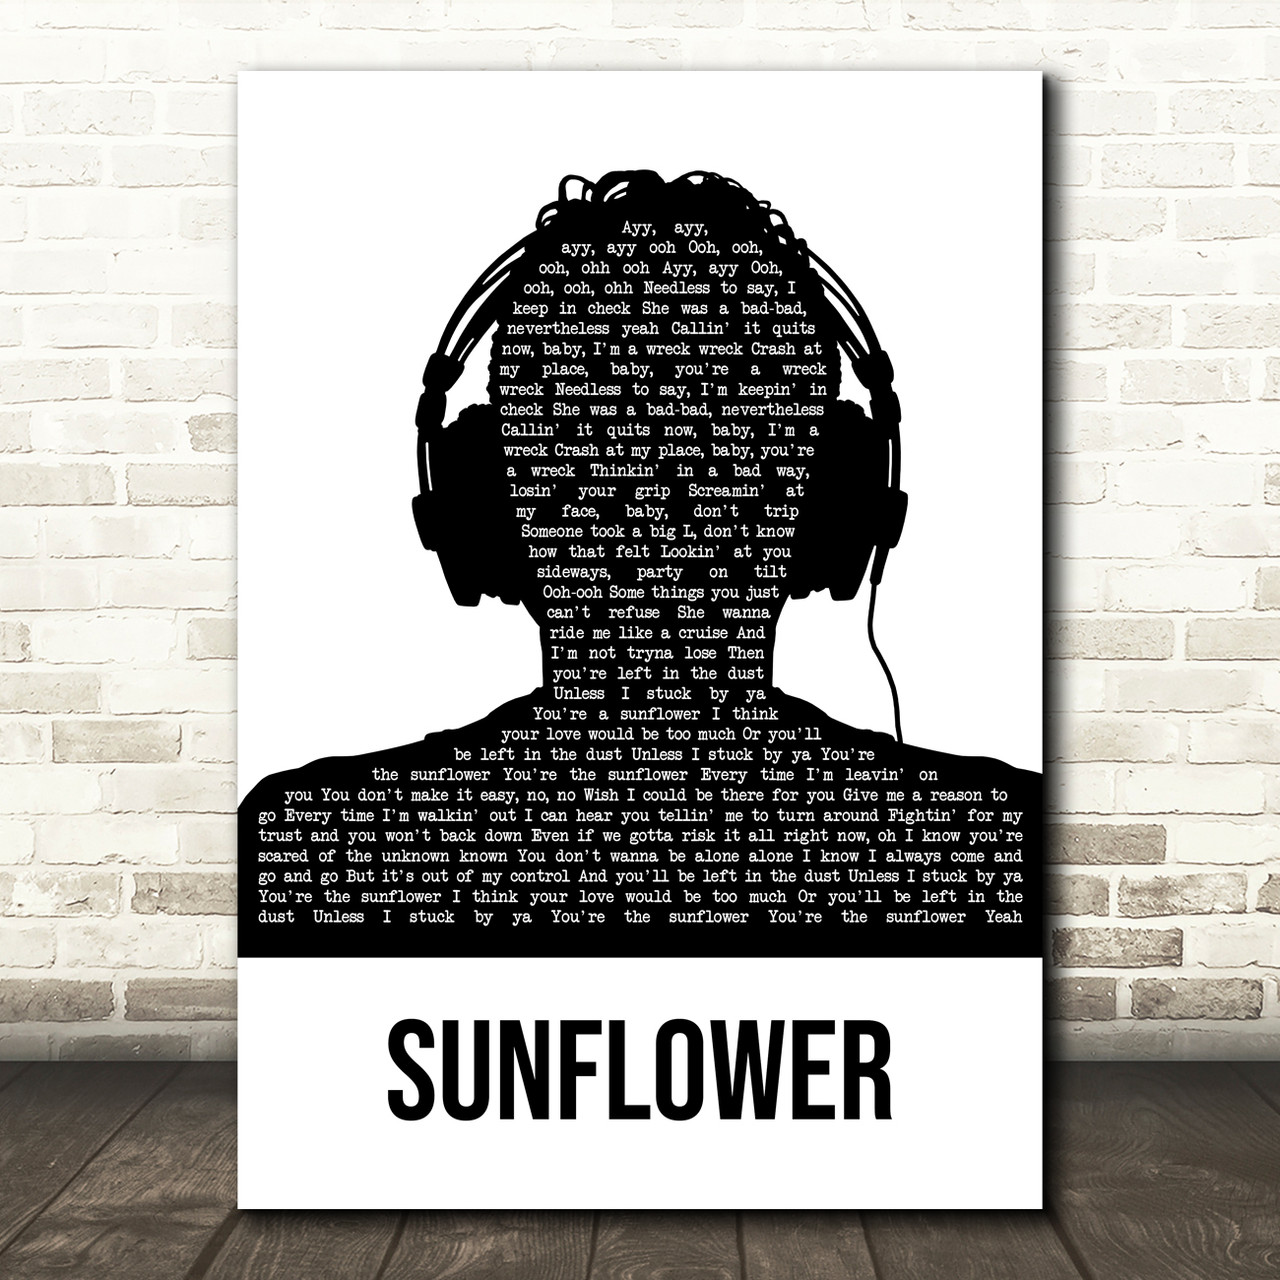 lyrics post malone sunflower